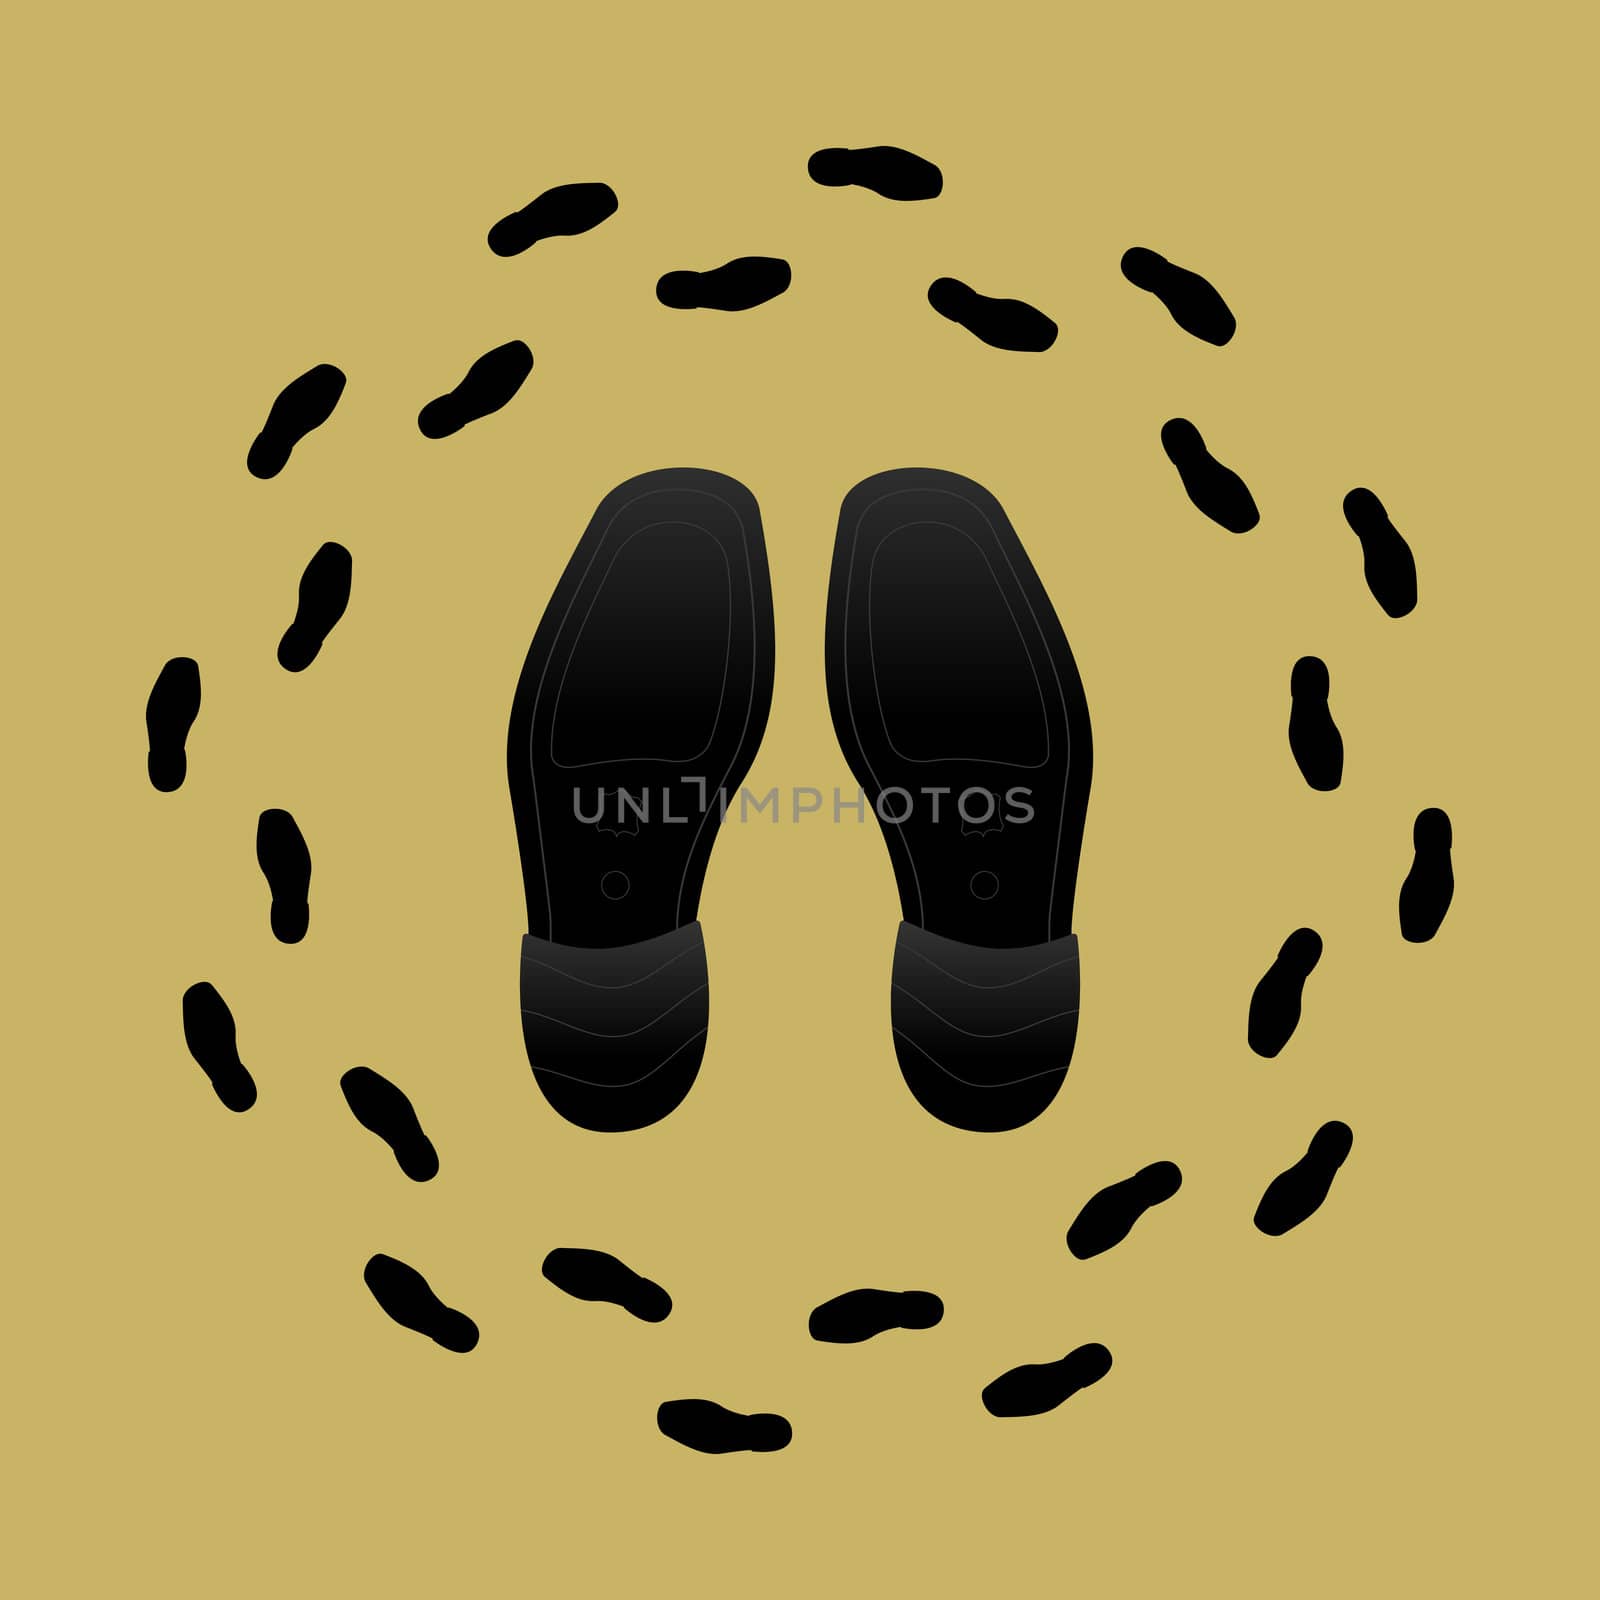 Bitmap Illustration of Shoe Soles and Shoe Prints